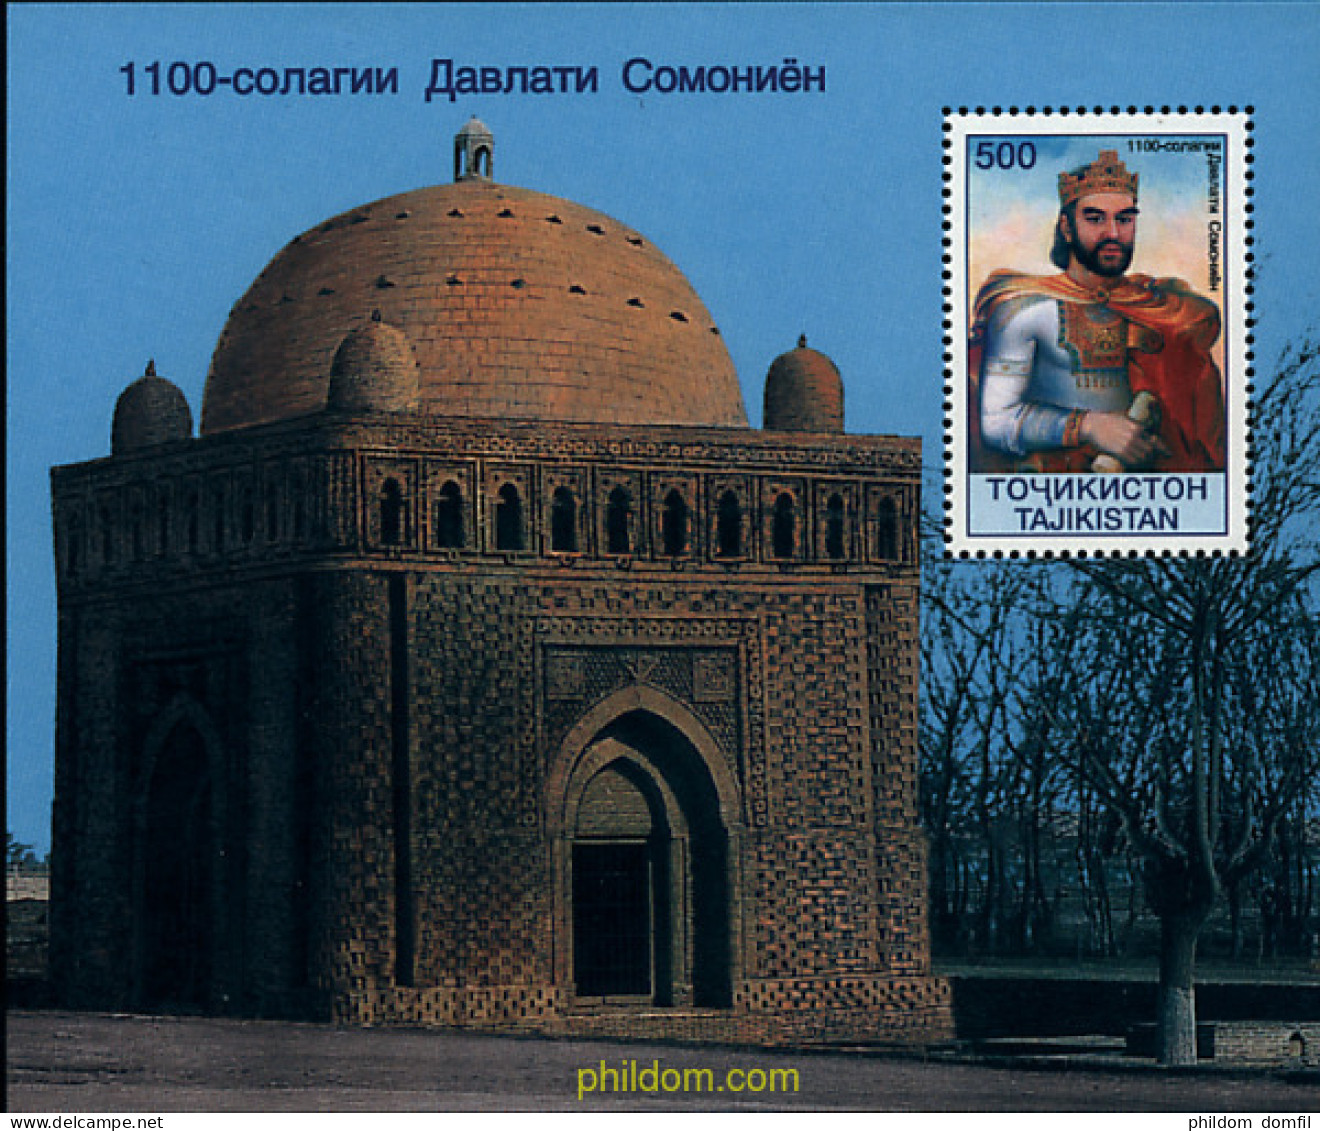 87200 MNH TAYIKISTAN 1999 1100 ANIVERSARIO DEL ESTADO DE LOS SAMANIDES - Tayikistán